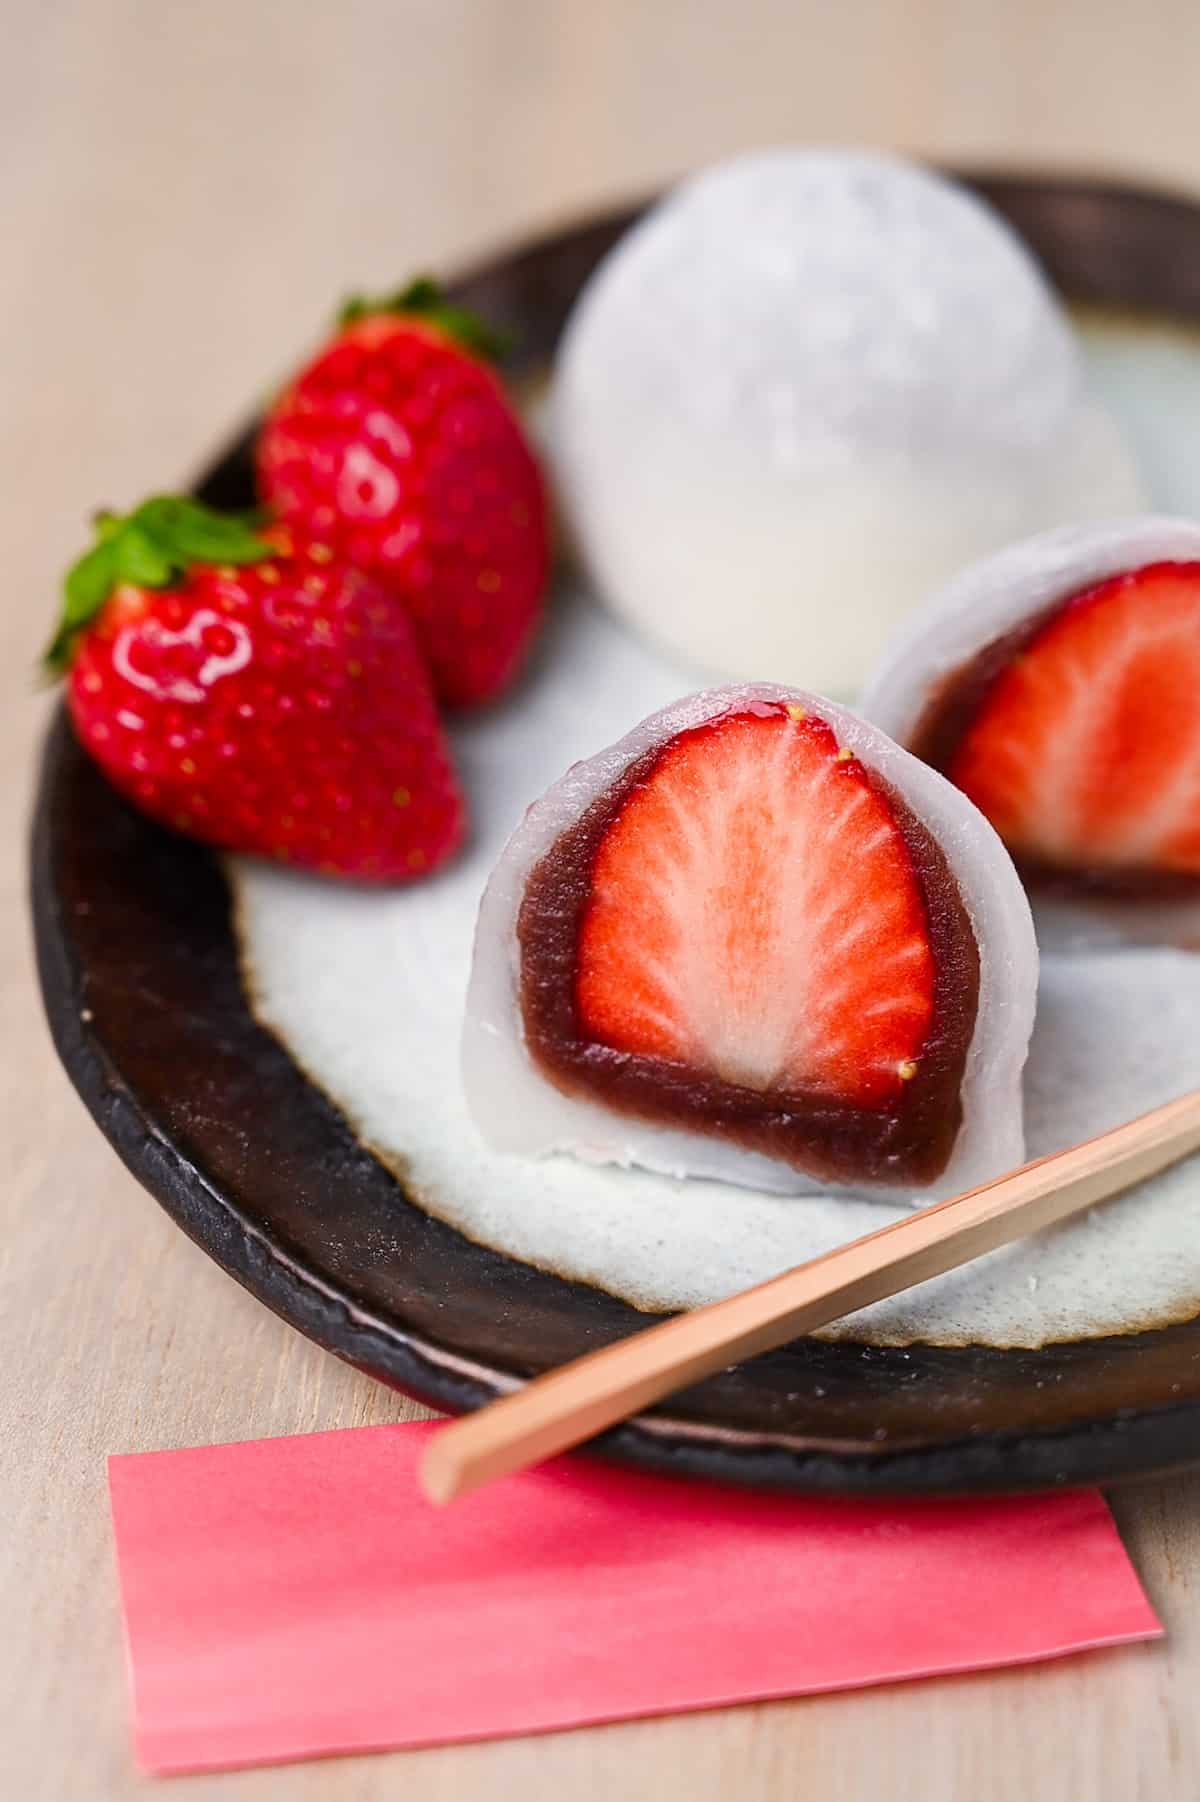 Homemade ichigo daifuku (strawberry mochi) cut in half and served on a plate with strawberries